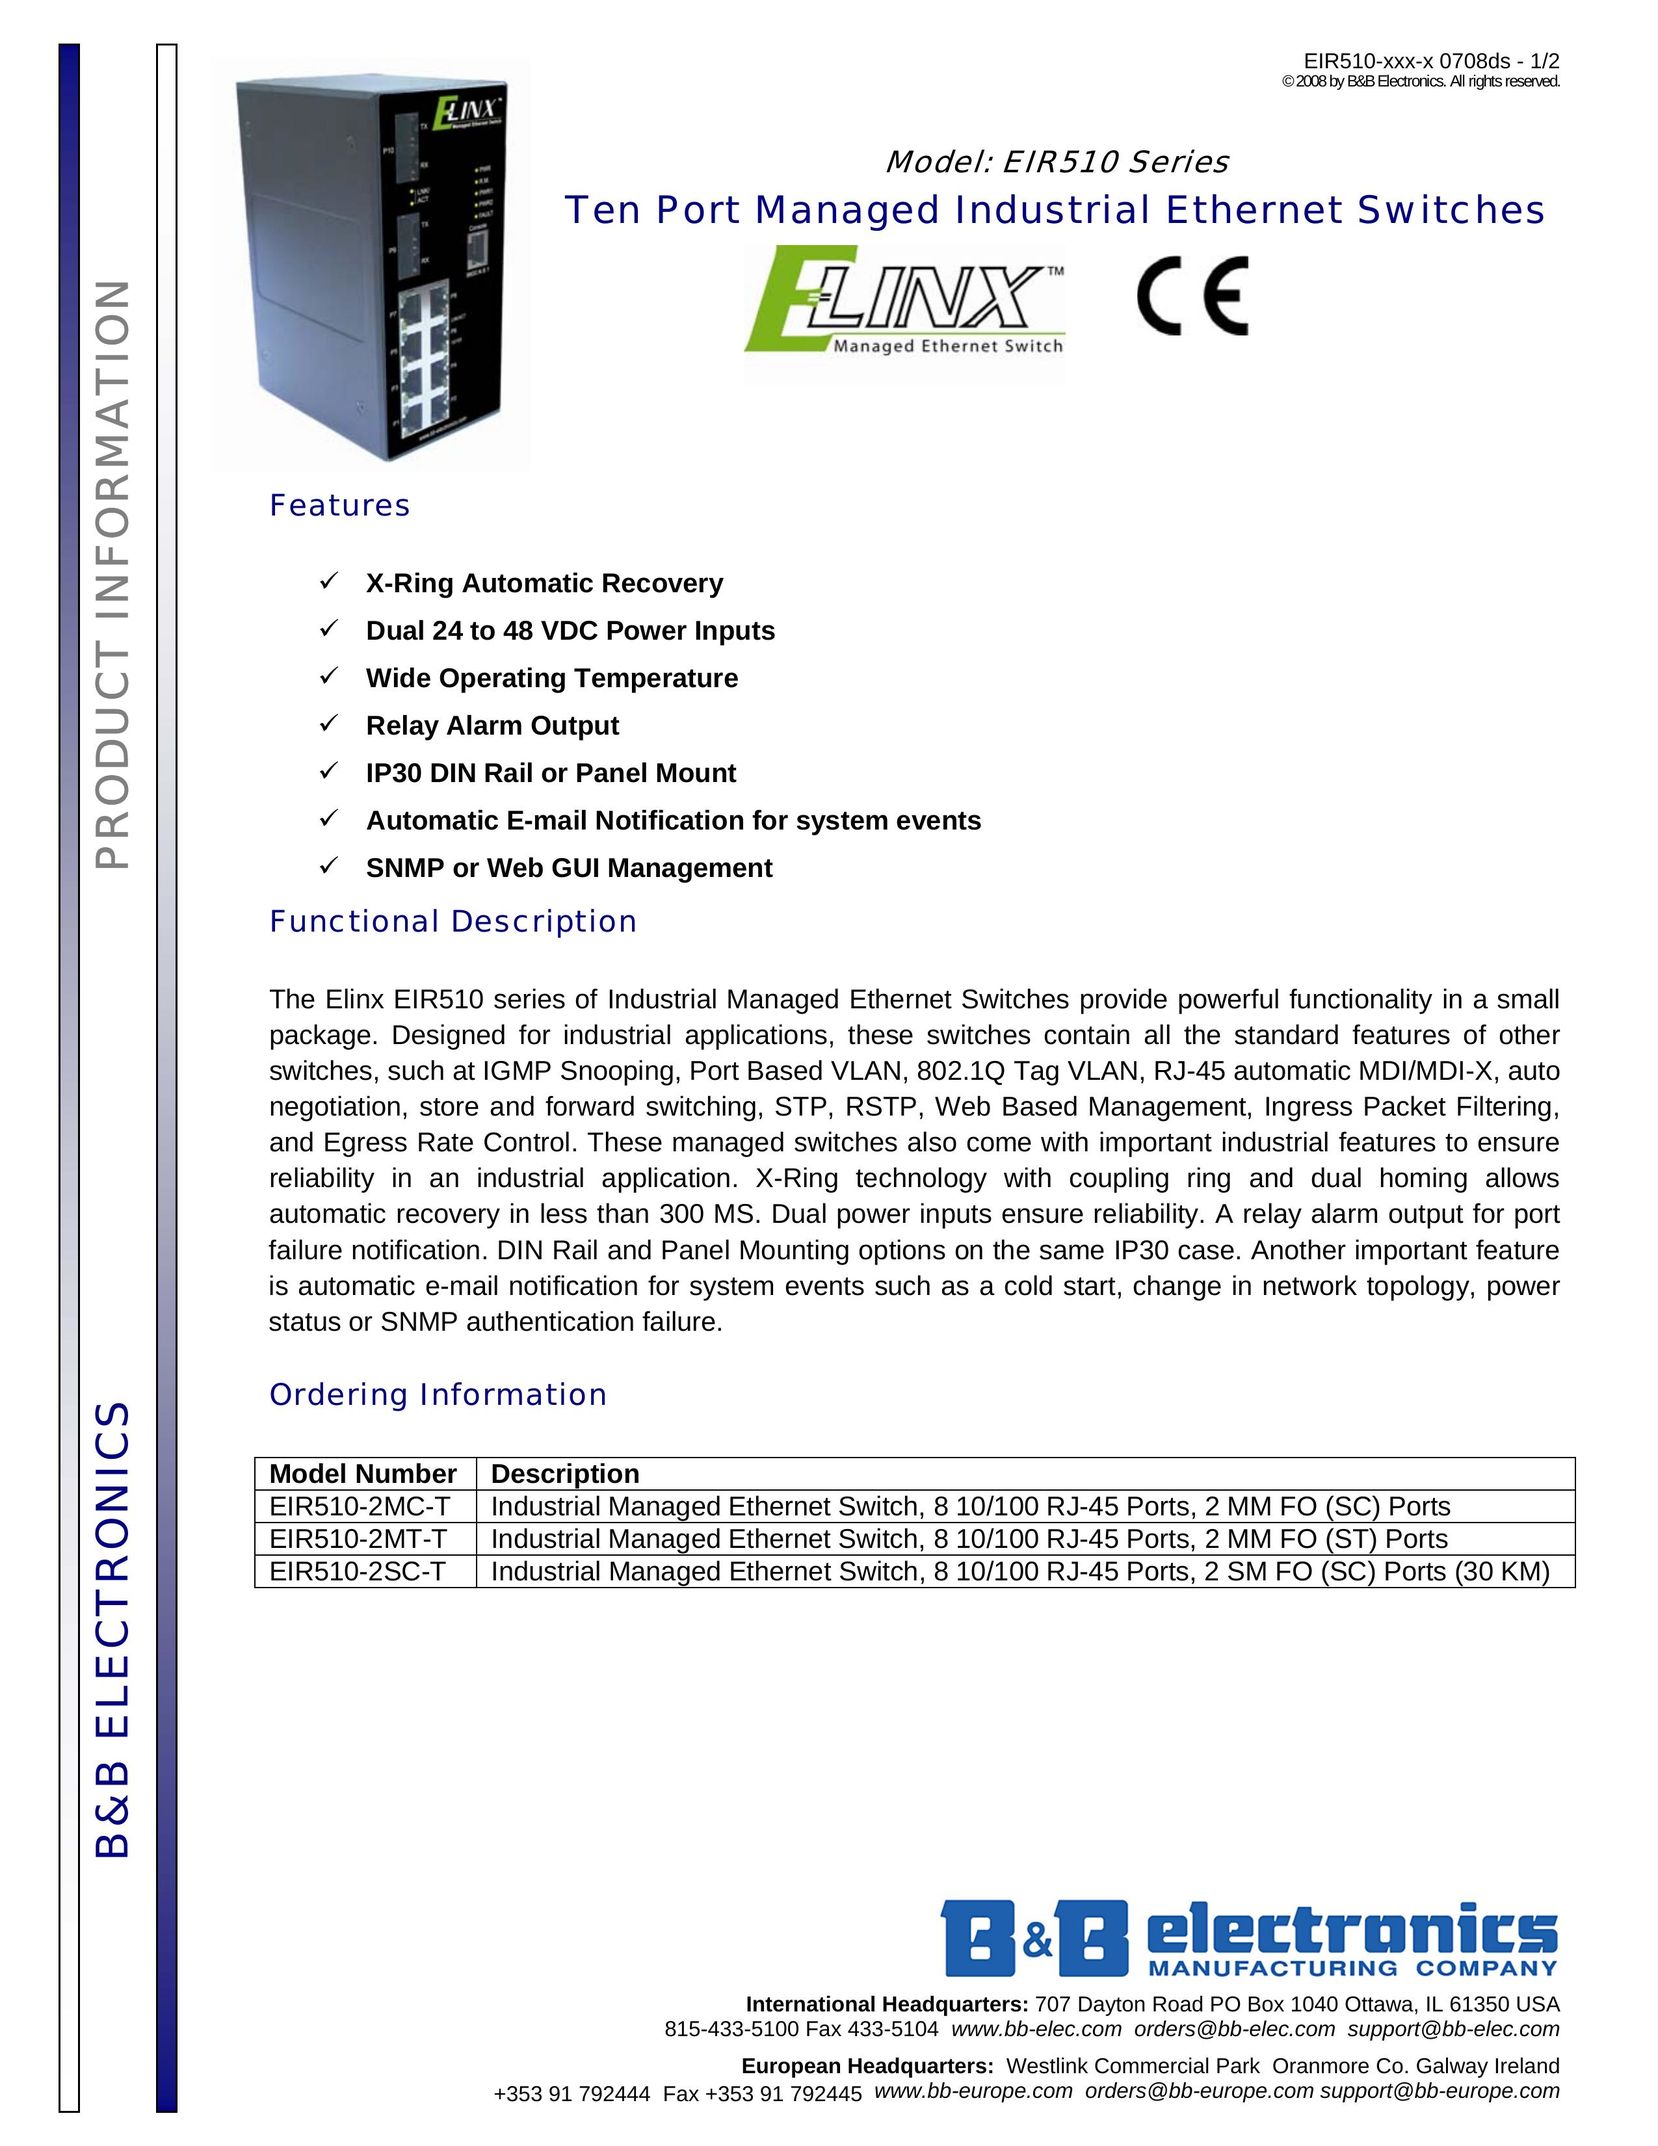 B&B Electronics EIR510-2MC-T Switch User Manual